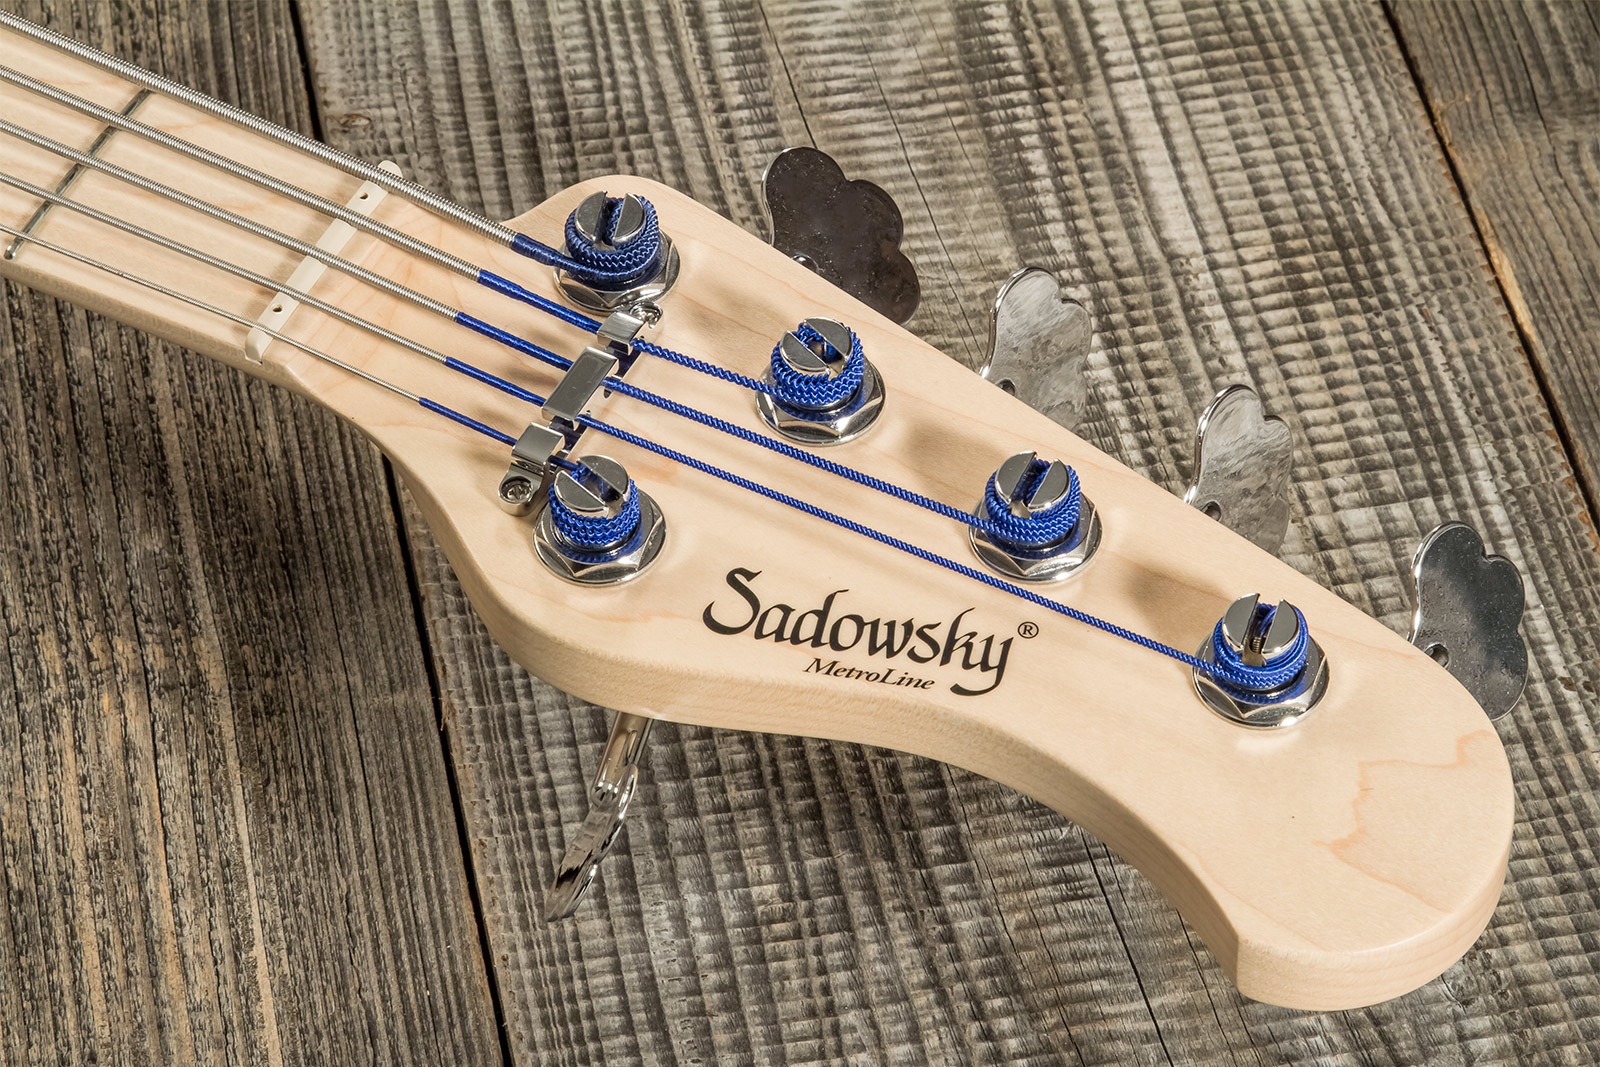 Sadowsky Single Cut Bass 24f Ash 5c Metroline All Active Mn - Satin Black Pearl - Solid body electric bass - Variation 1